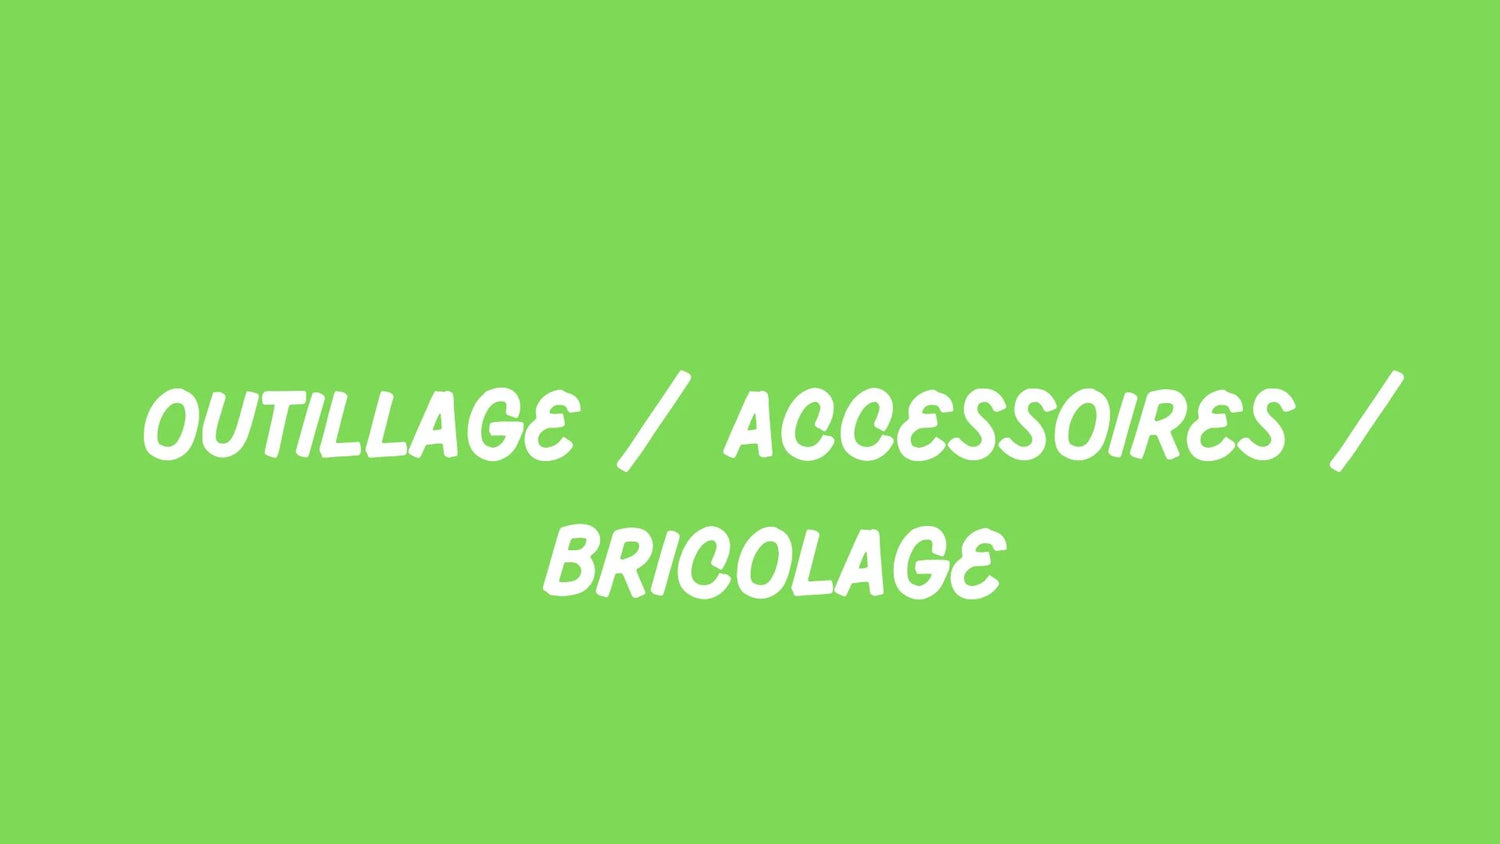 Outillage / Accessoires / Bricolage